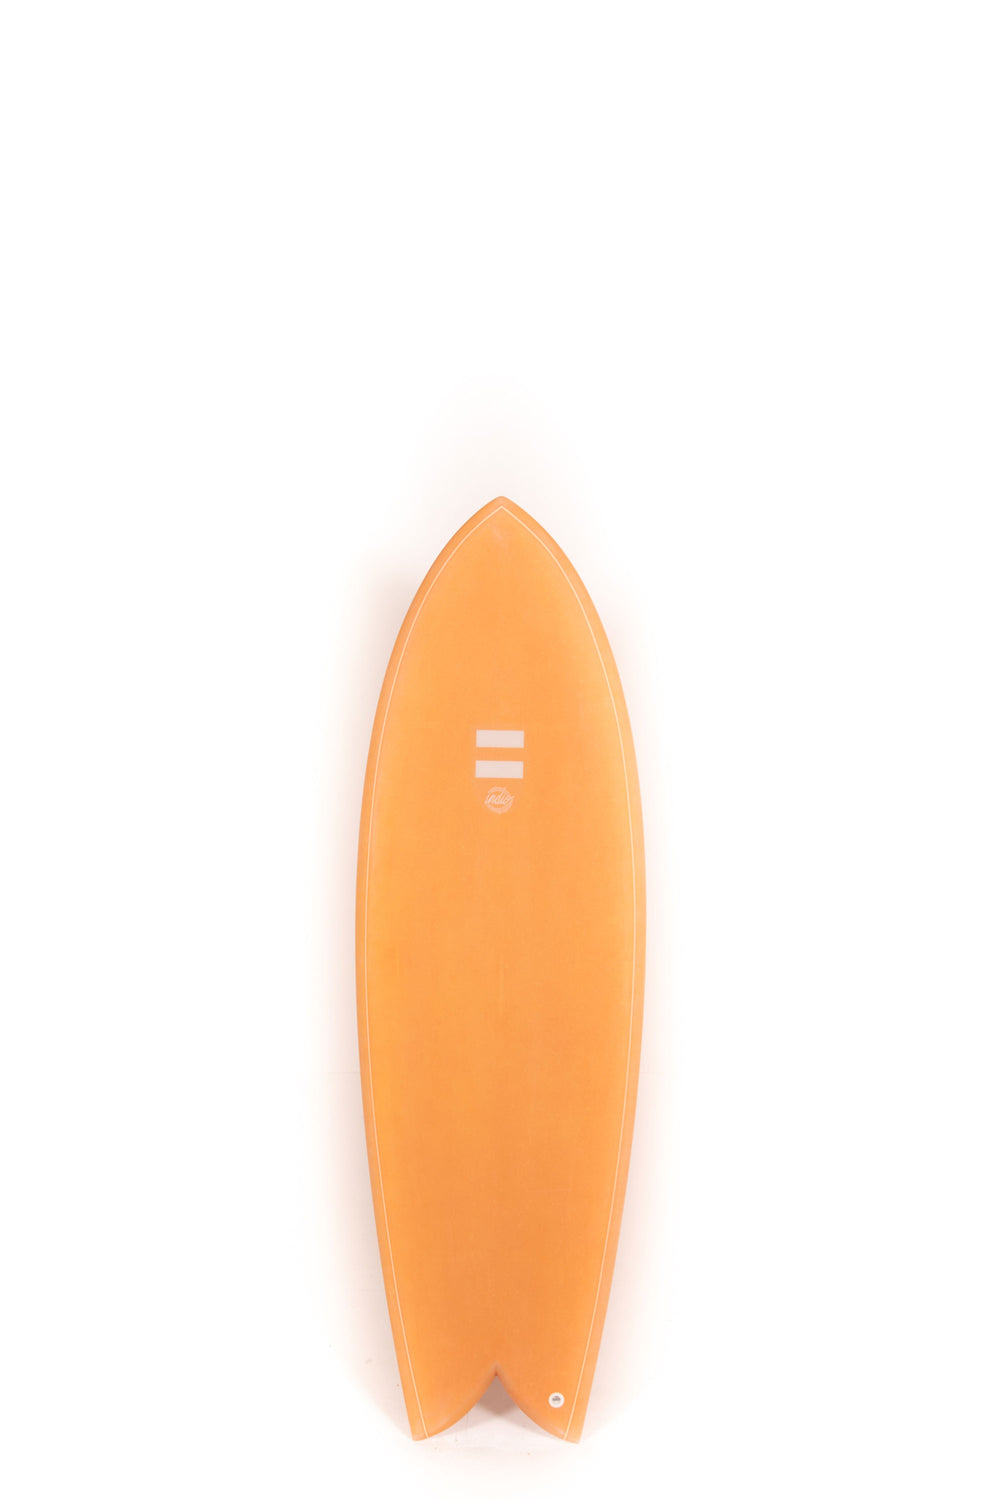 Pukas Surf Shop -  Indio Surfboards - DAB TERRACOTA FCS II - 5’9” x 21 1/8 x 2 9/16 x 37.60L.